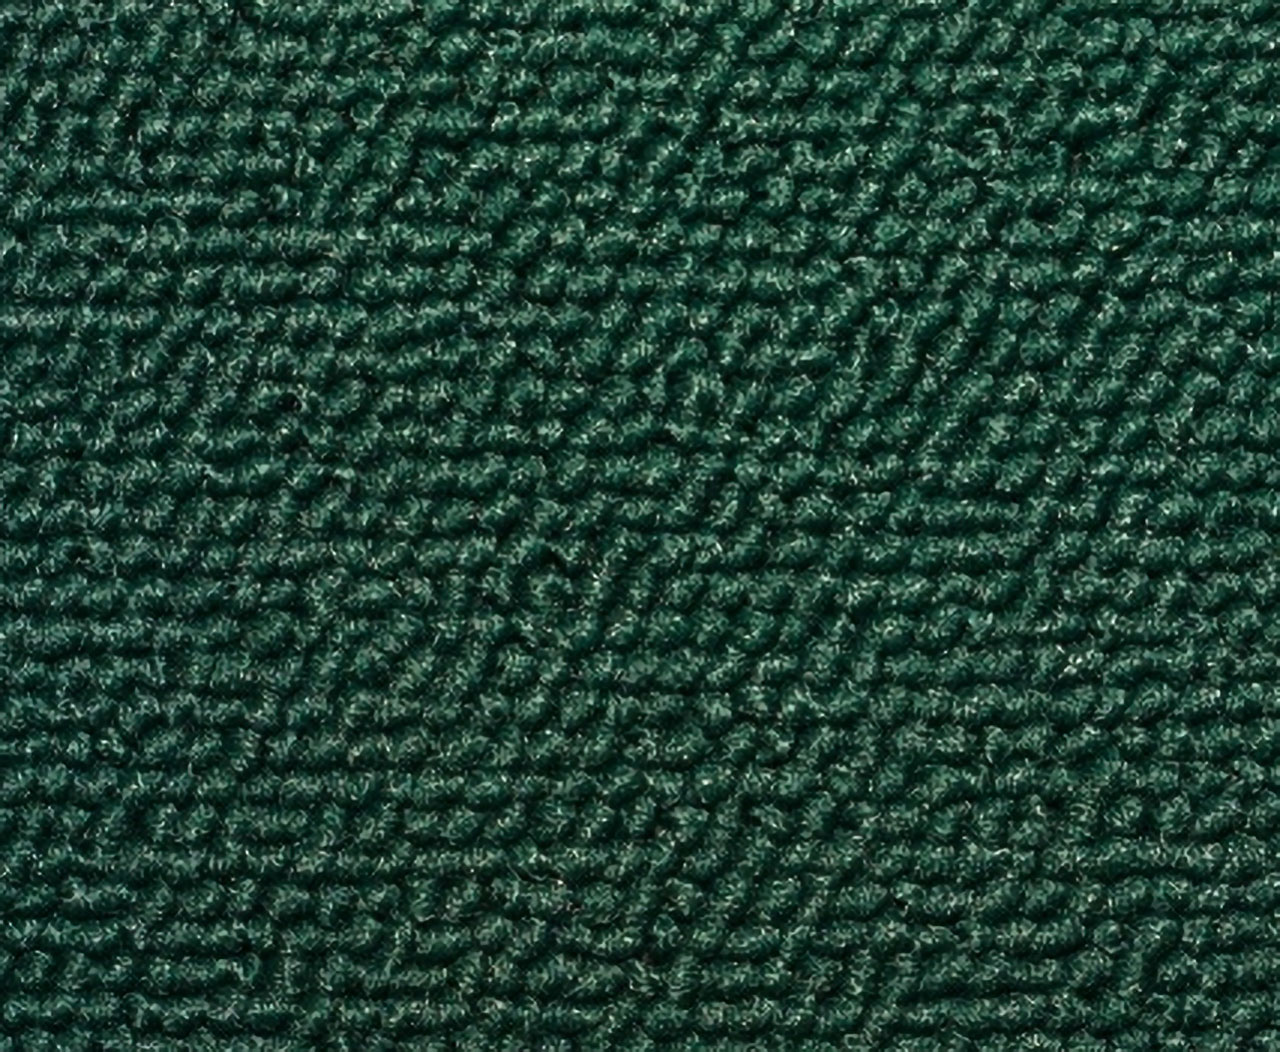 Holden Standard HD Standard Ute E06 Triton Green Carpet (Image 1 of 1)